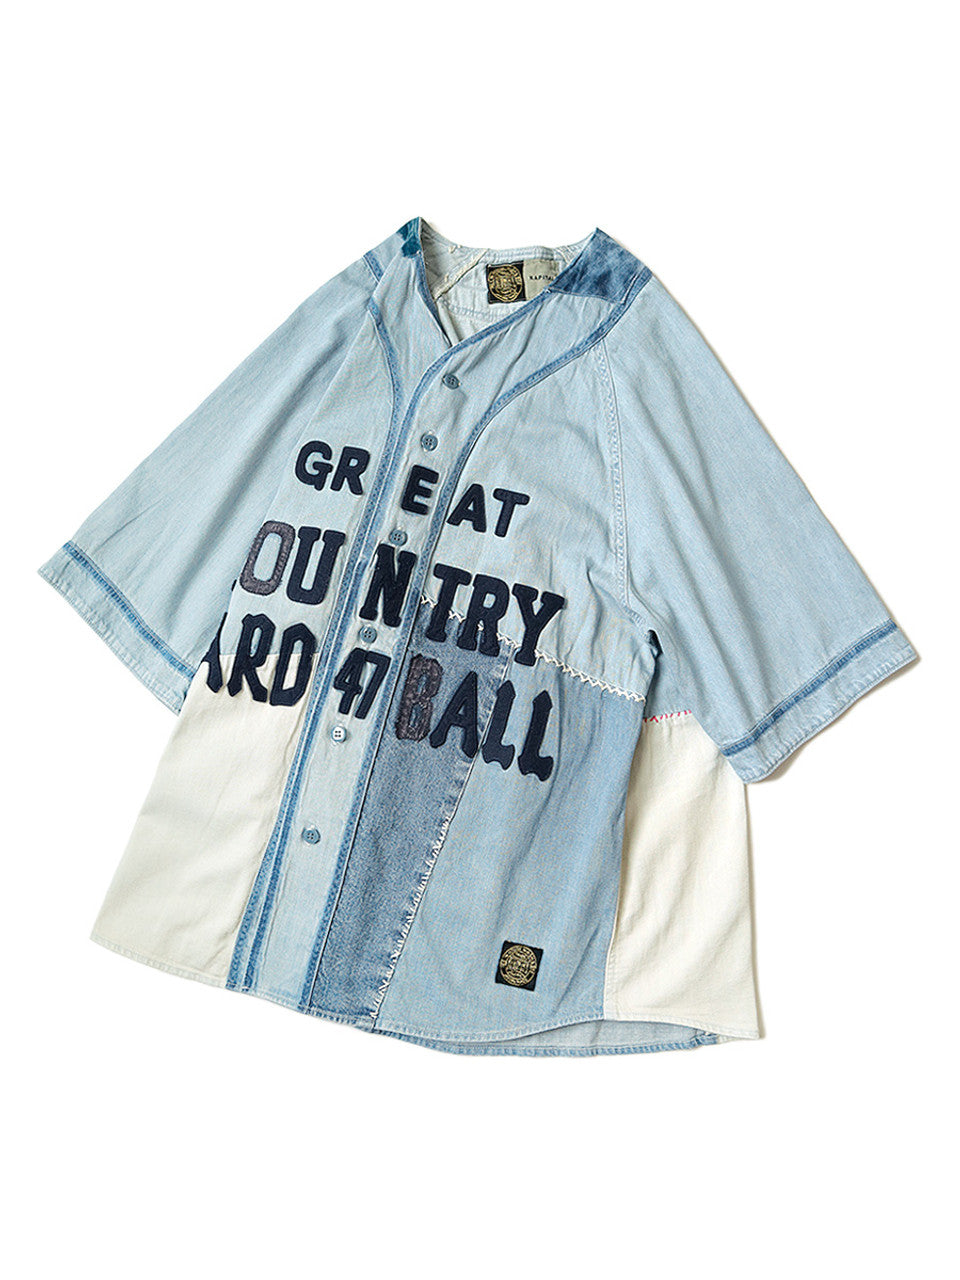 Kapital KOUNTRY 8oz Reconstruction Denim GREAT KOUNTRY Baseball Shirt -  Indigo (Processing) - Totem Brand Co.